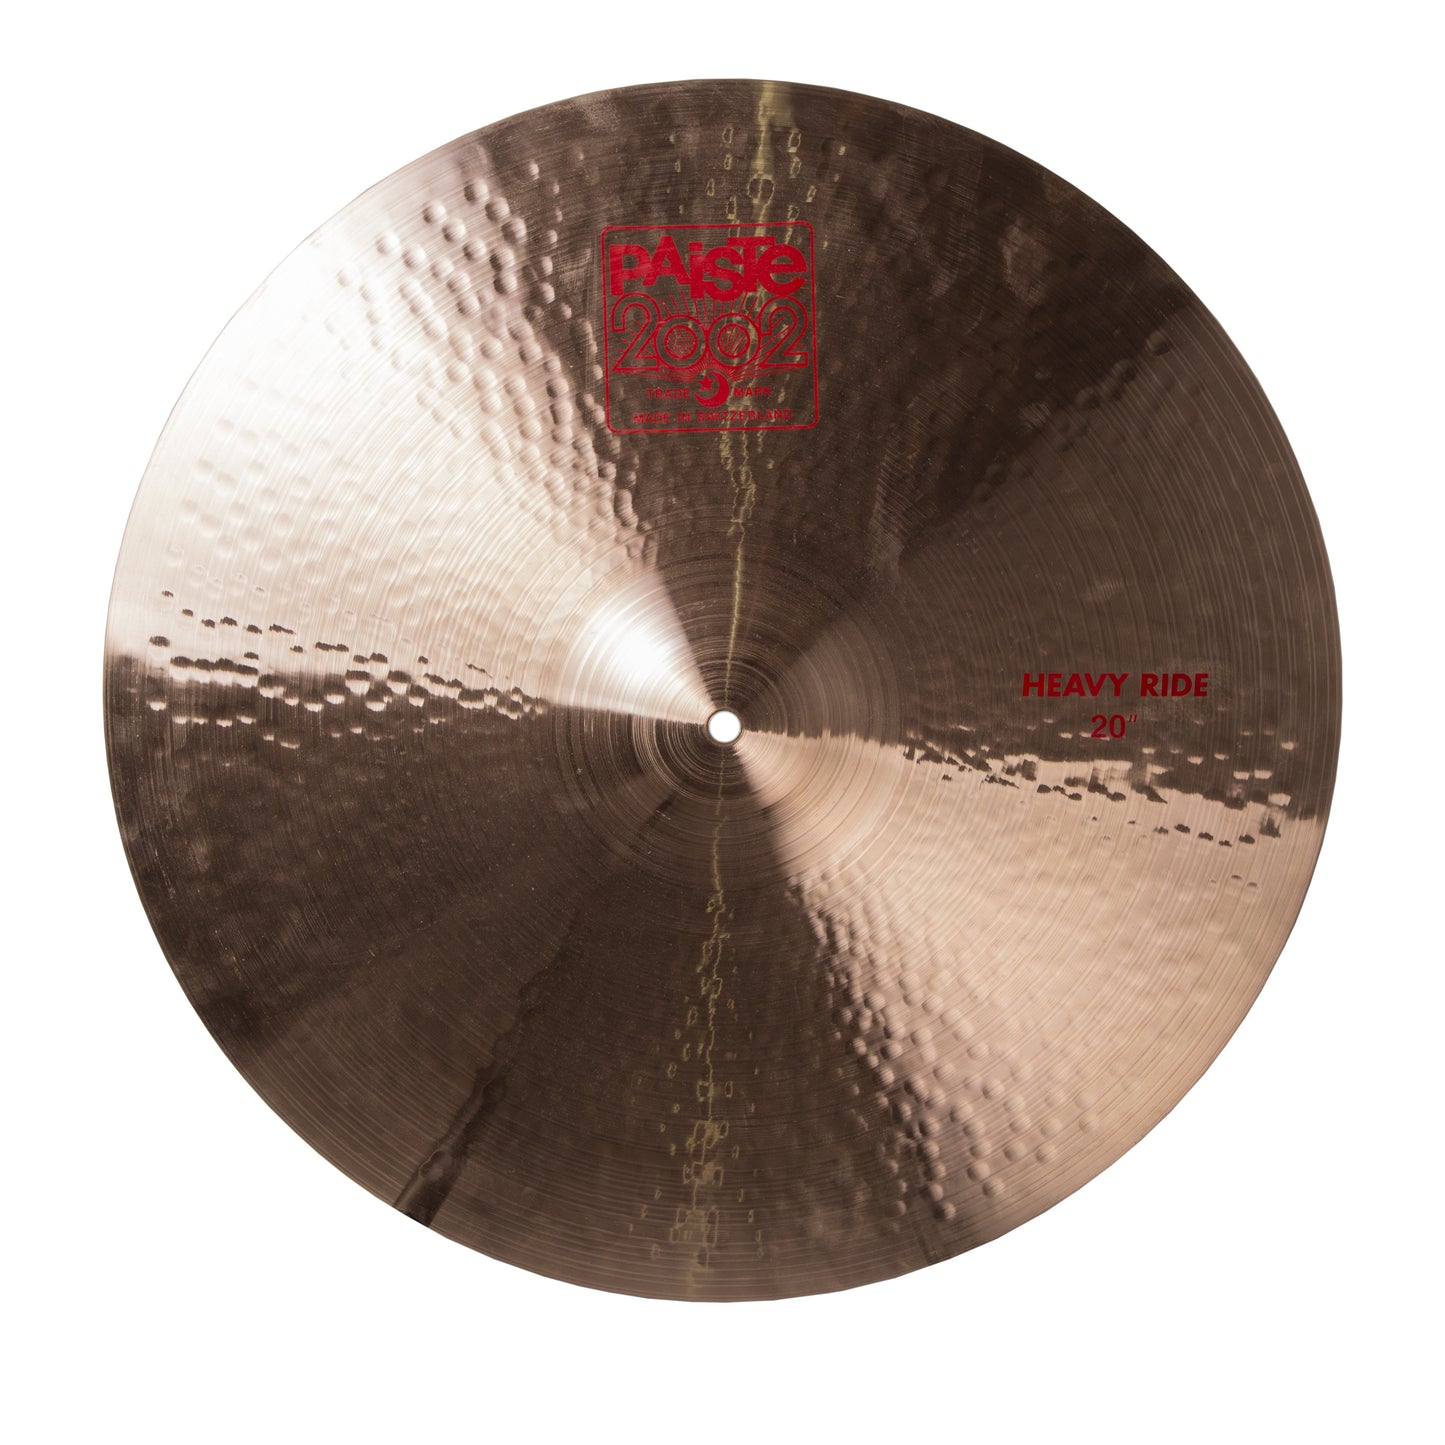 Paiste 20” 2002 Heavy Ride Cymbal